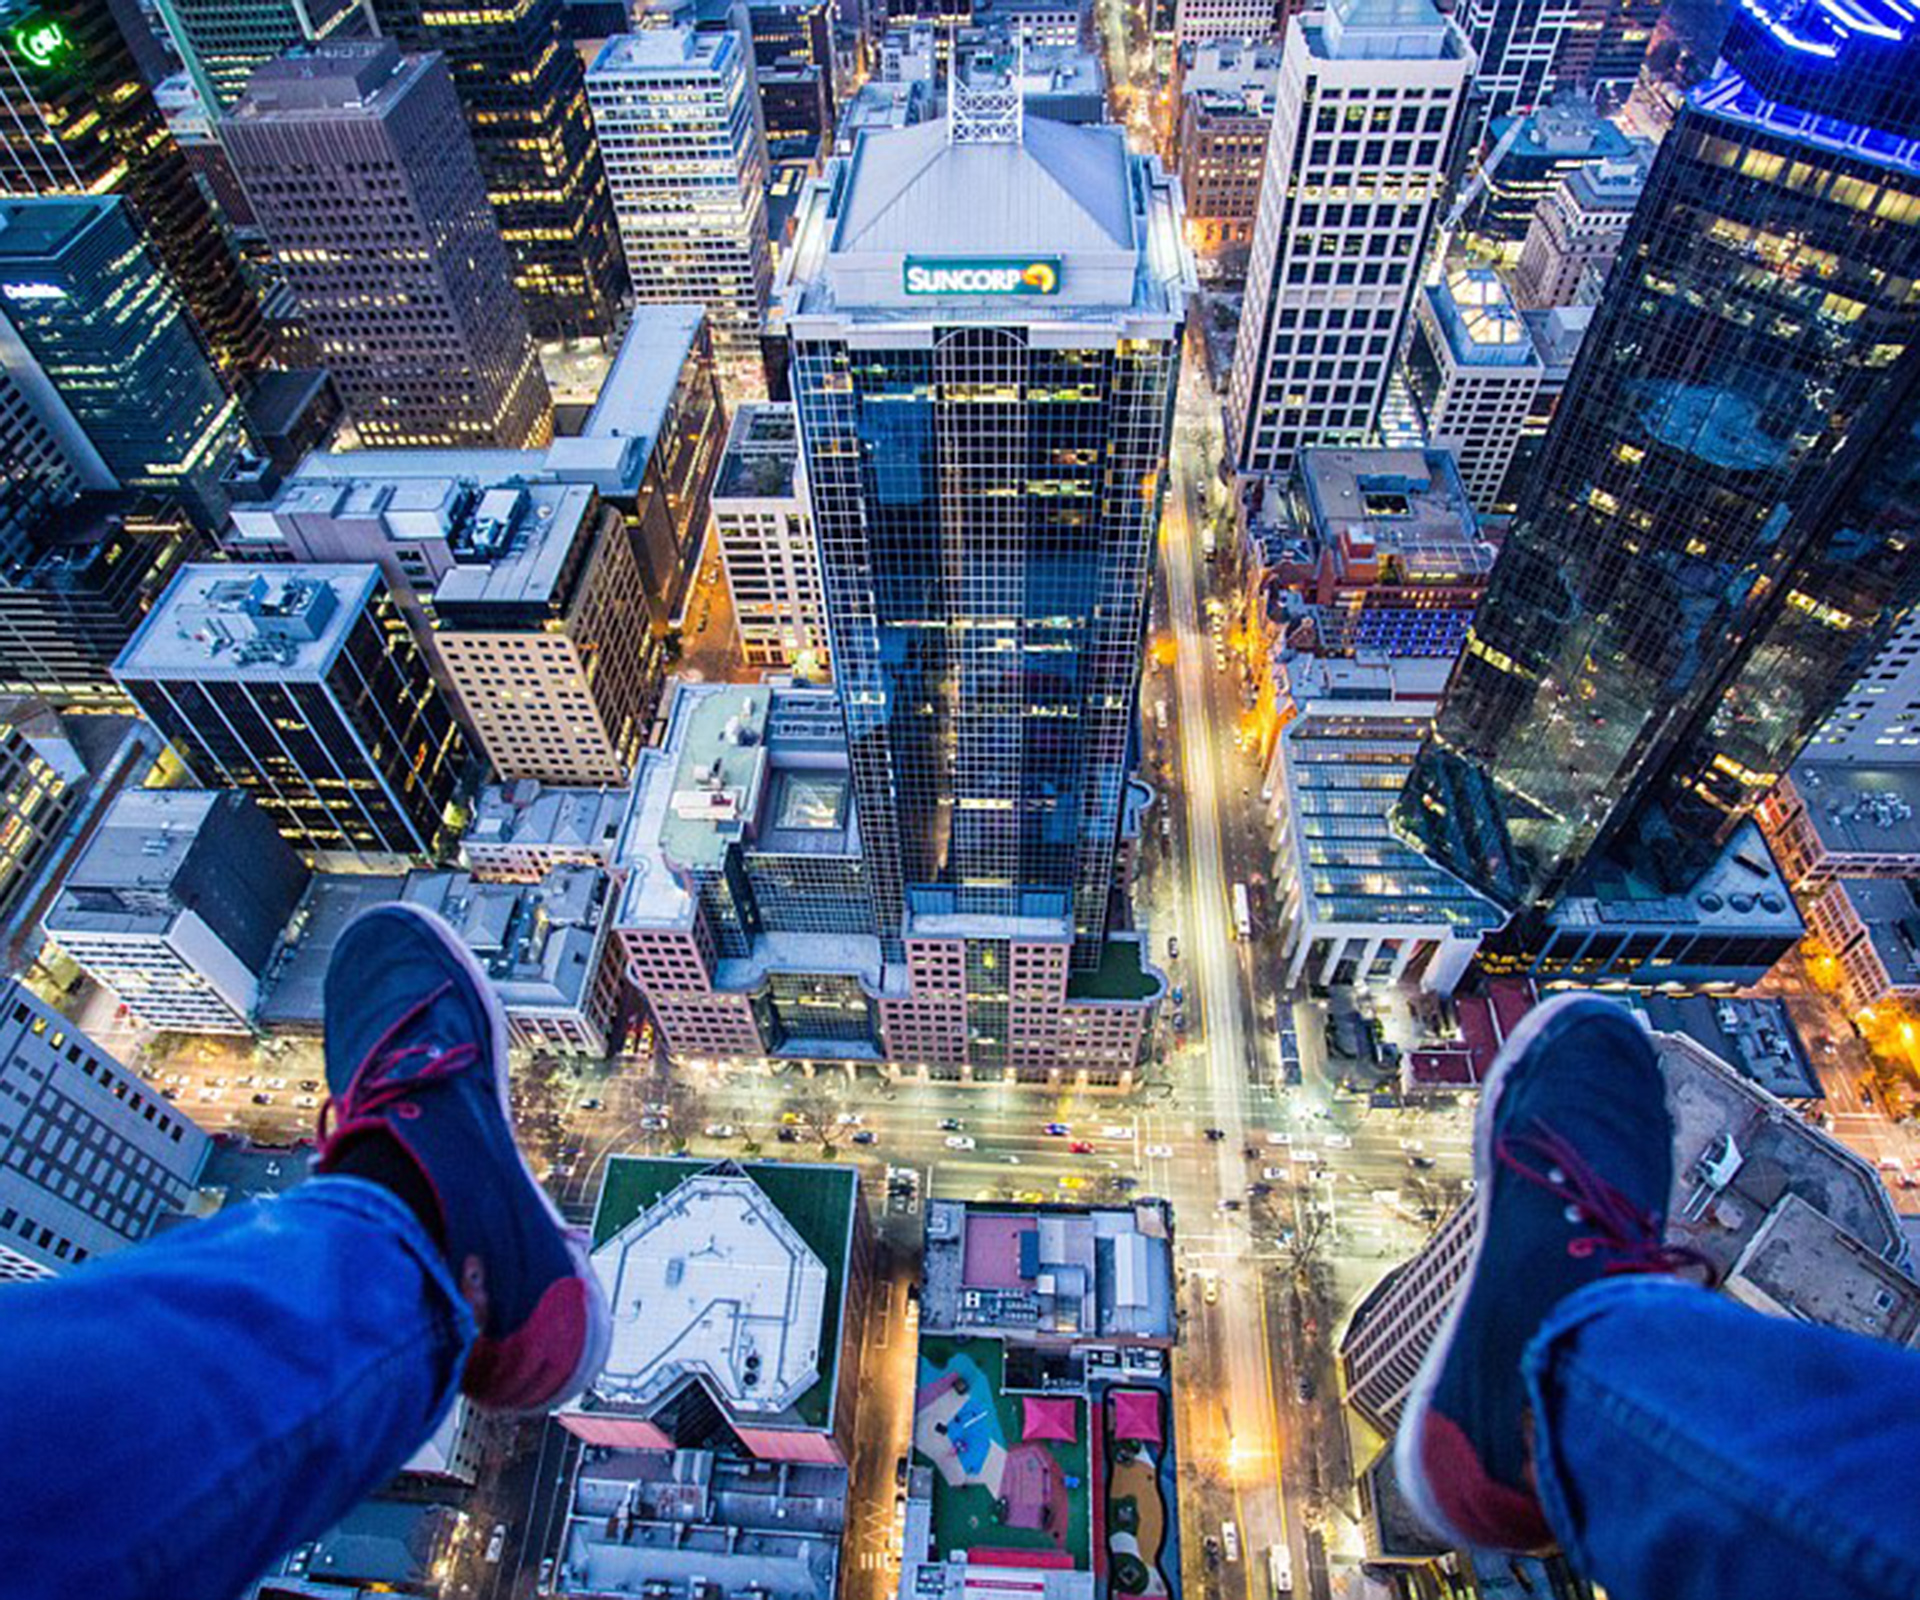 Daredevil takes amazing photos of Melbourne city skyline